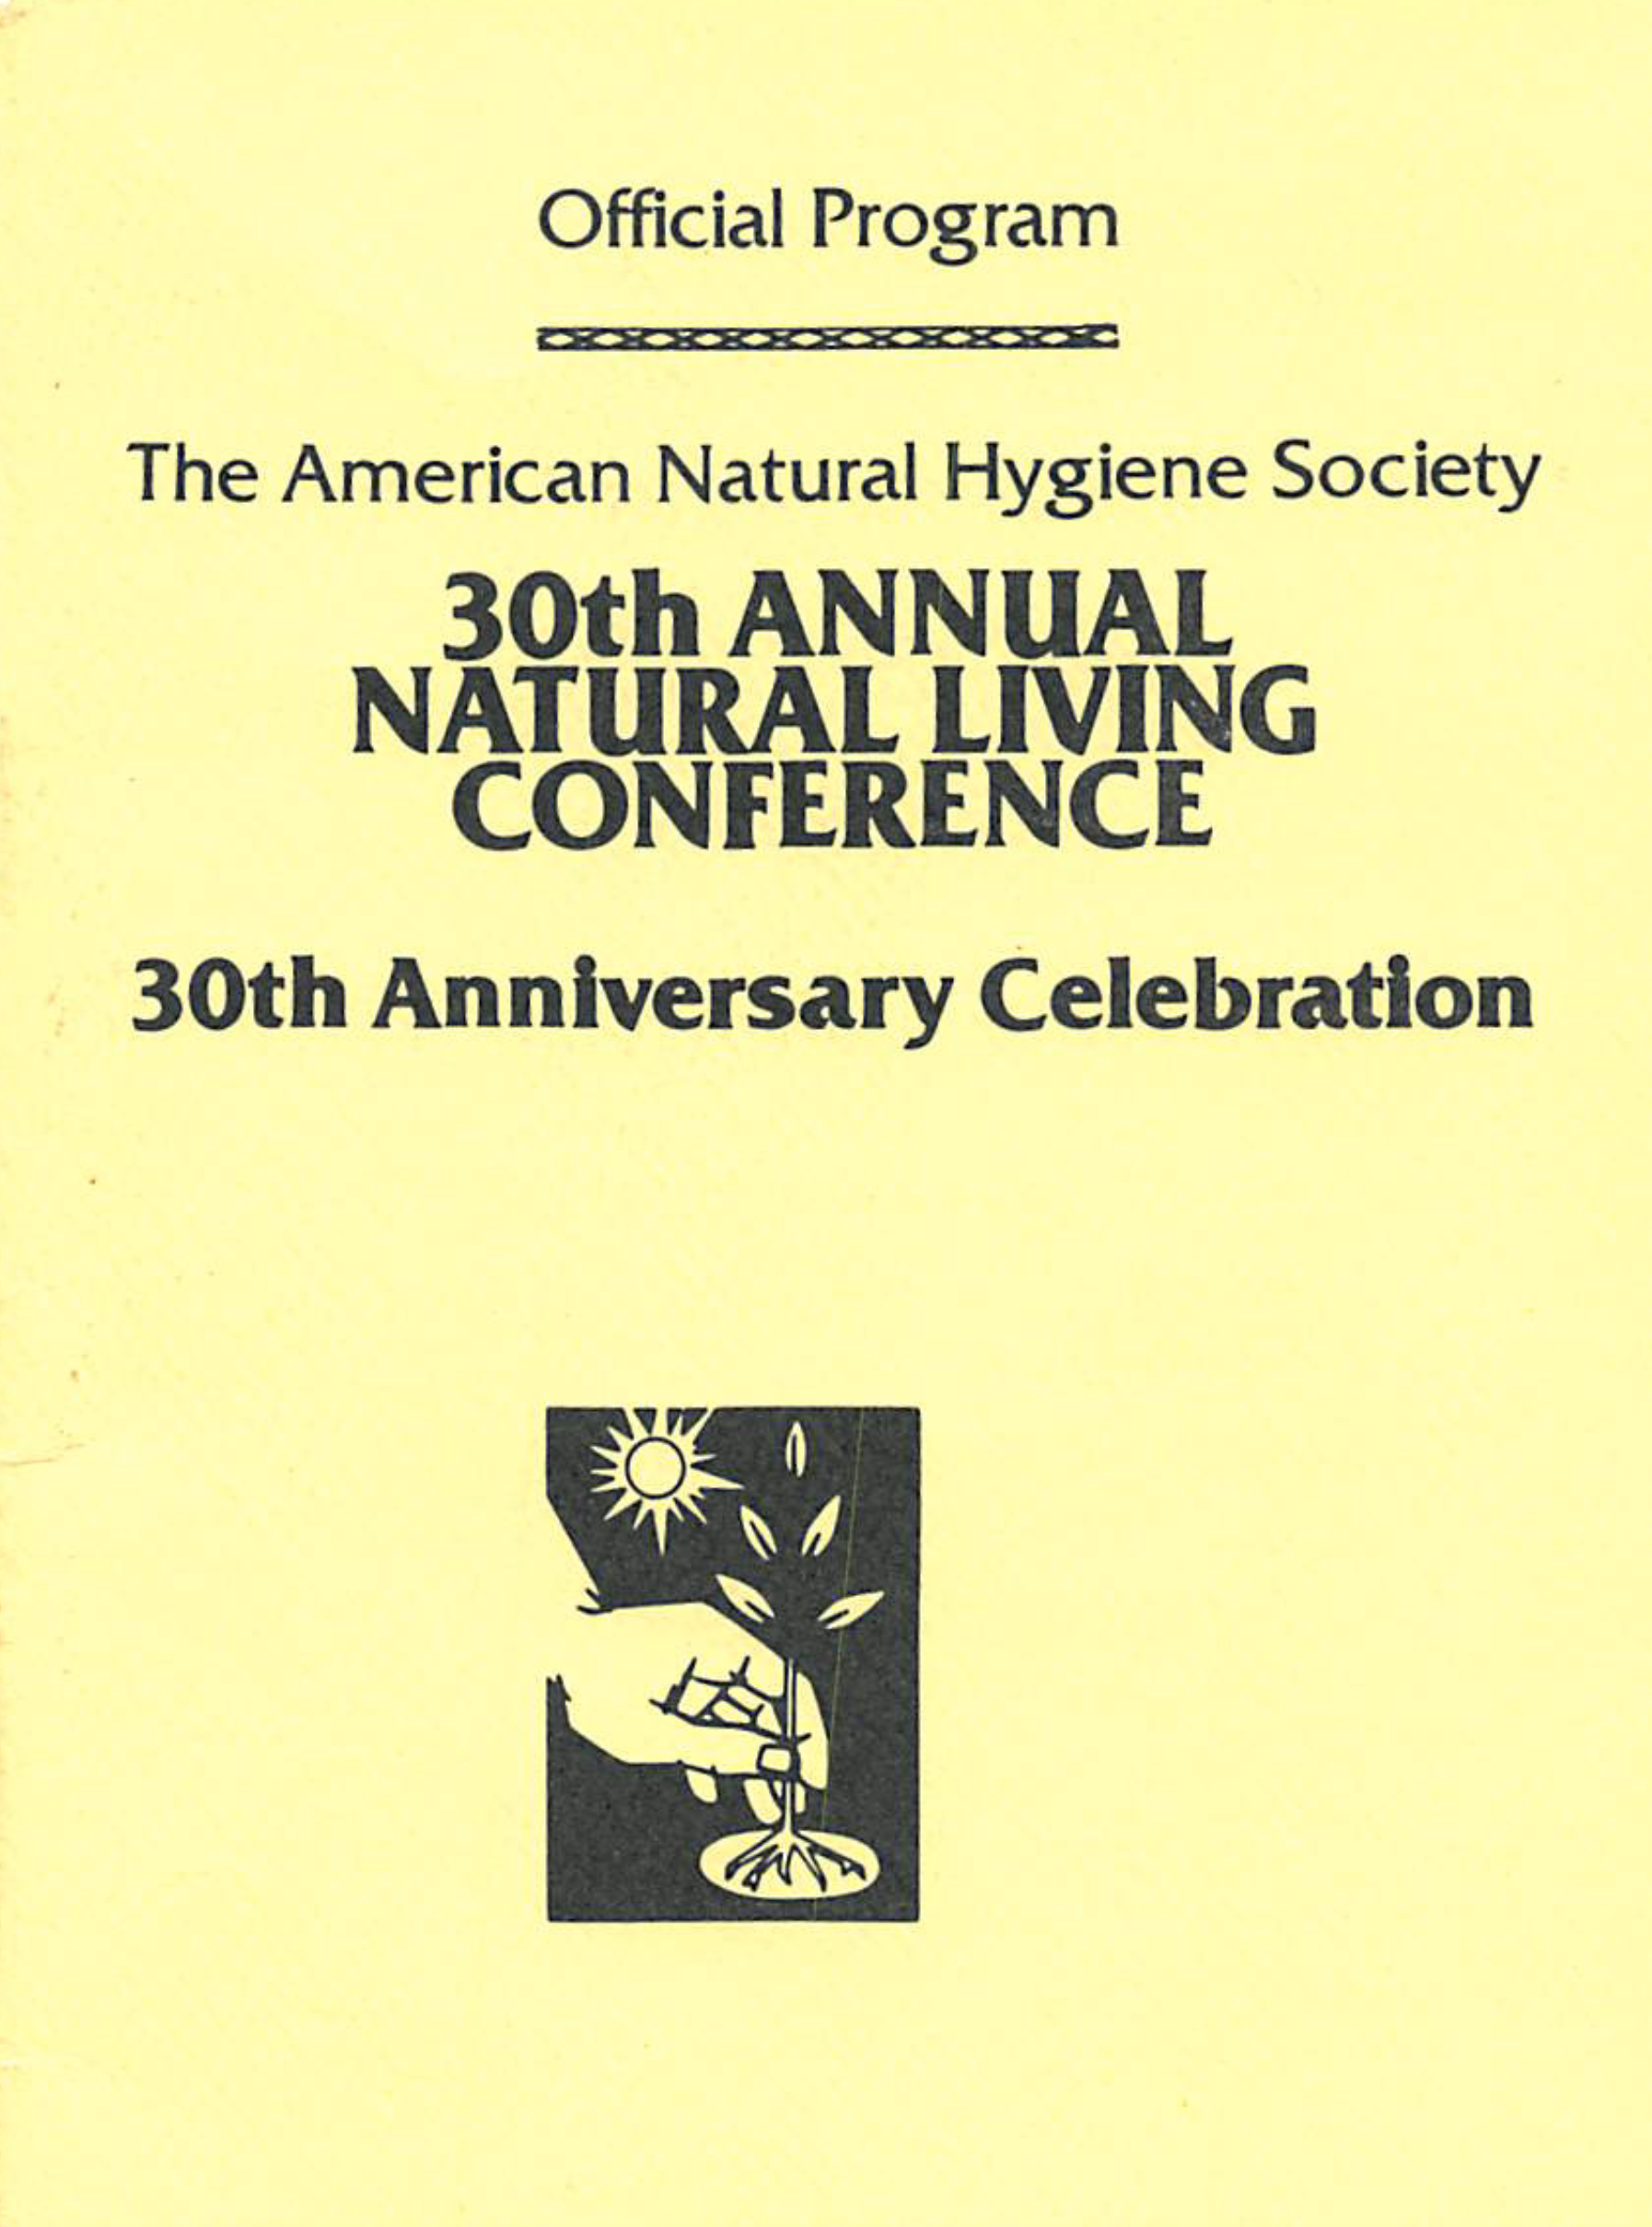 Conference Program. New York, 1978